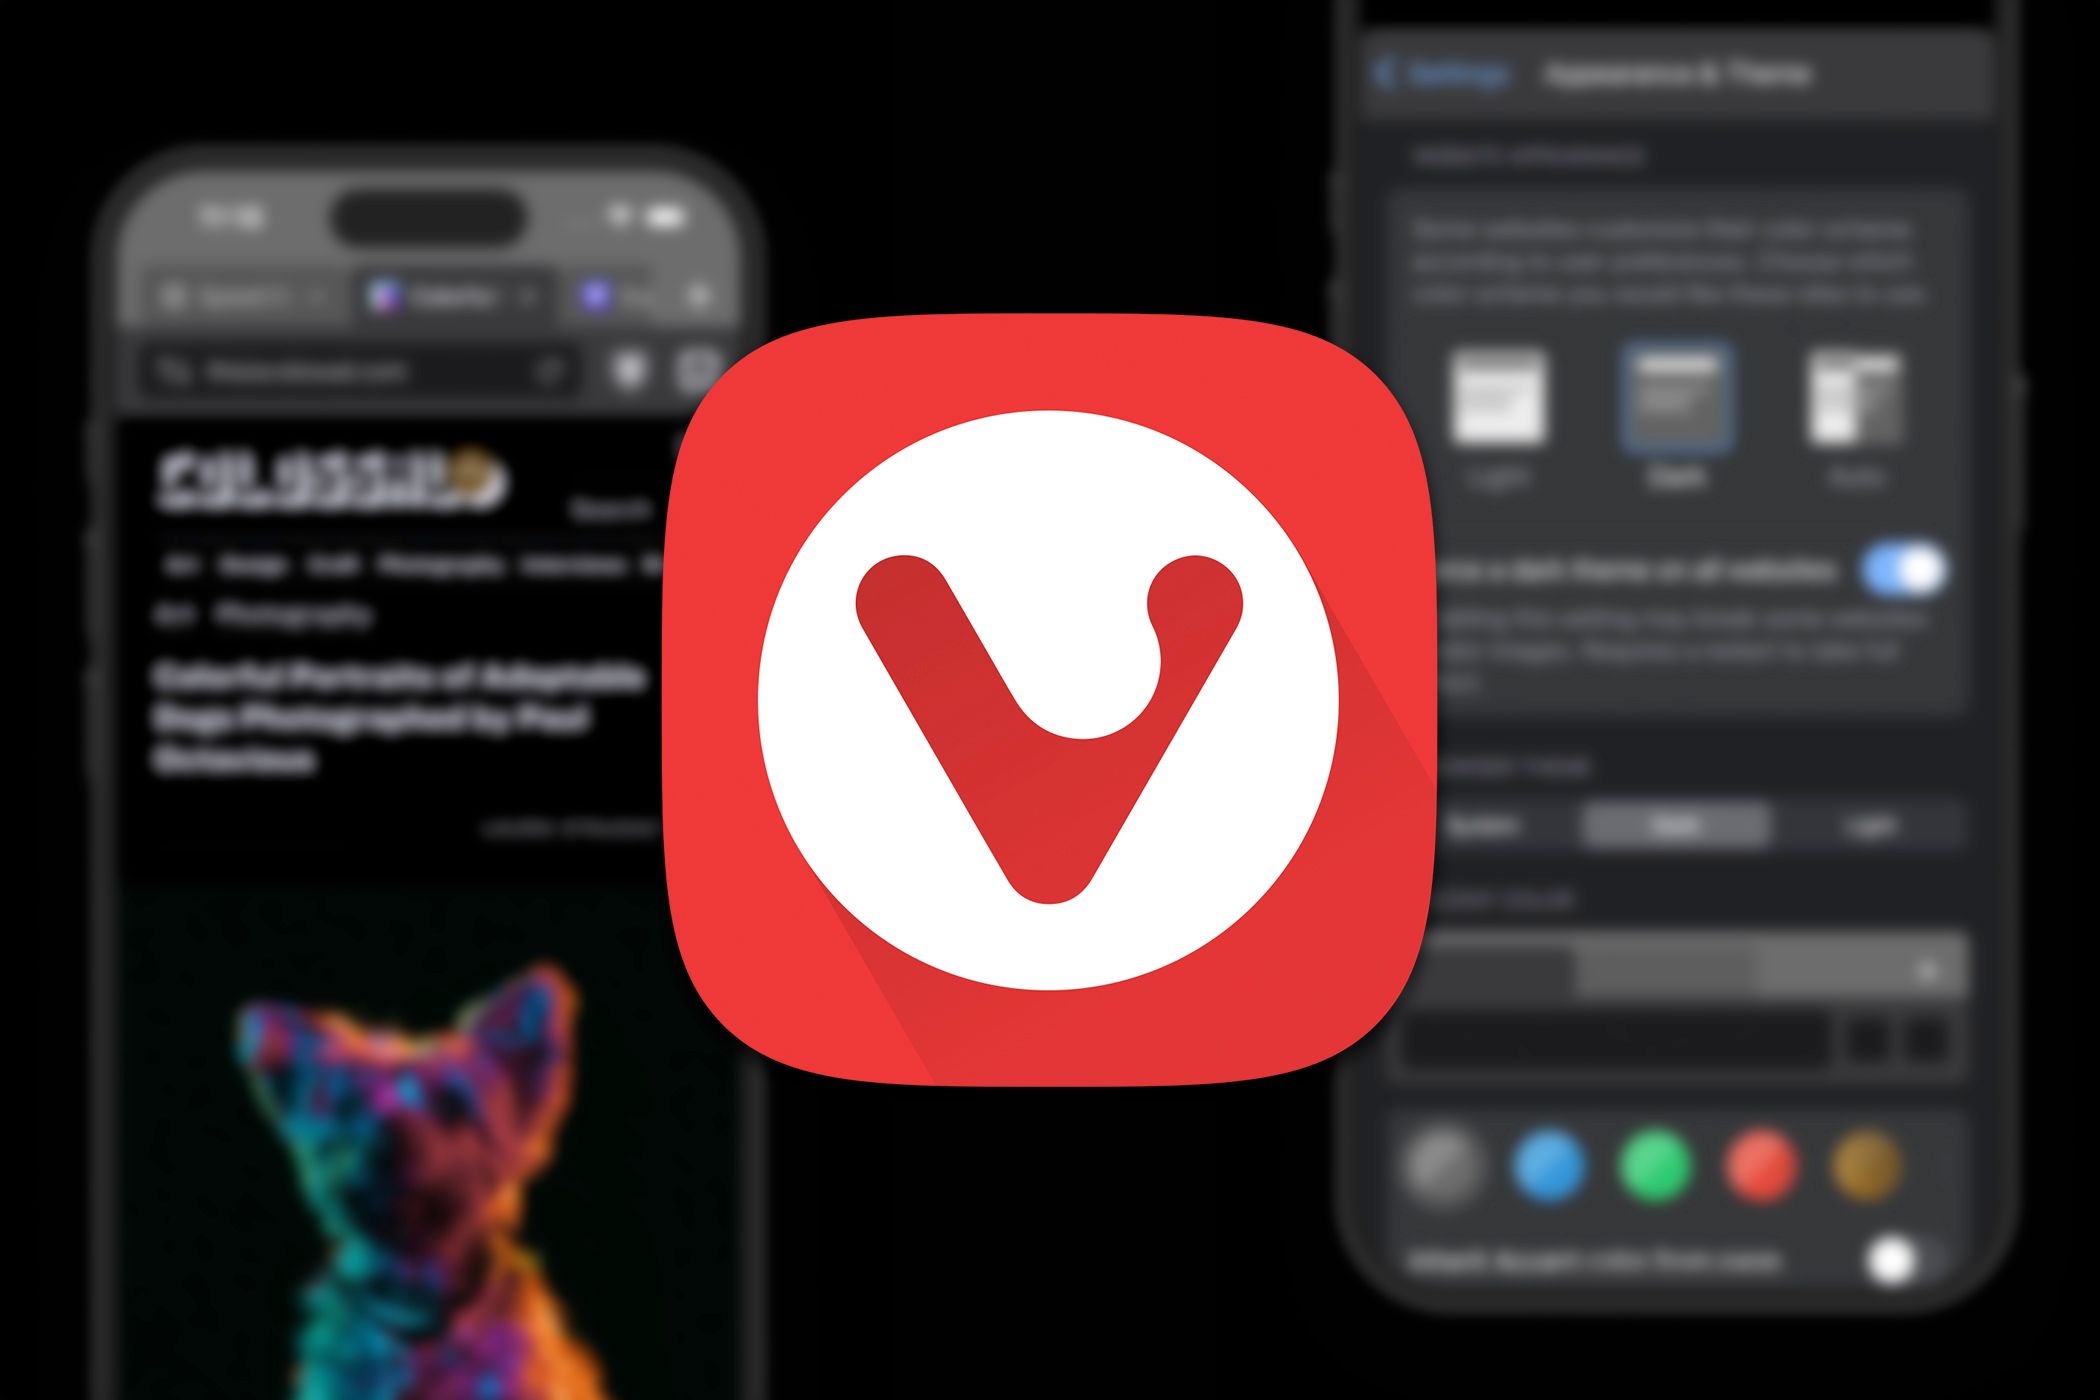 The Vivaldi logo over screenshots of the Vivaldi iOS app.